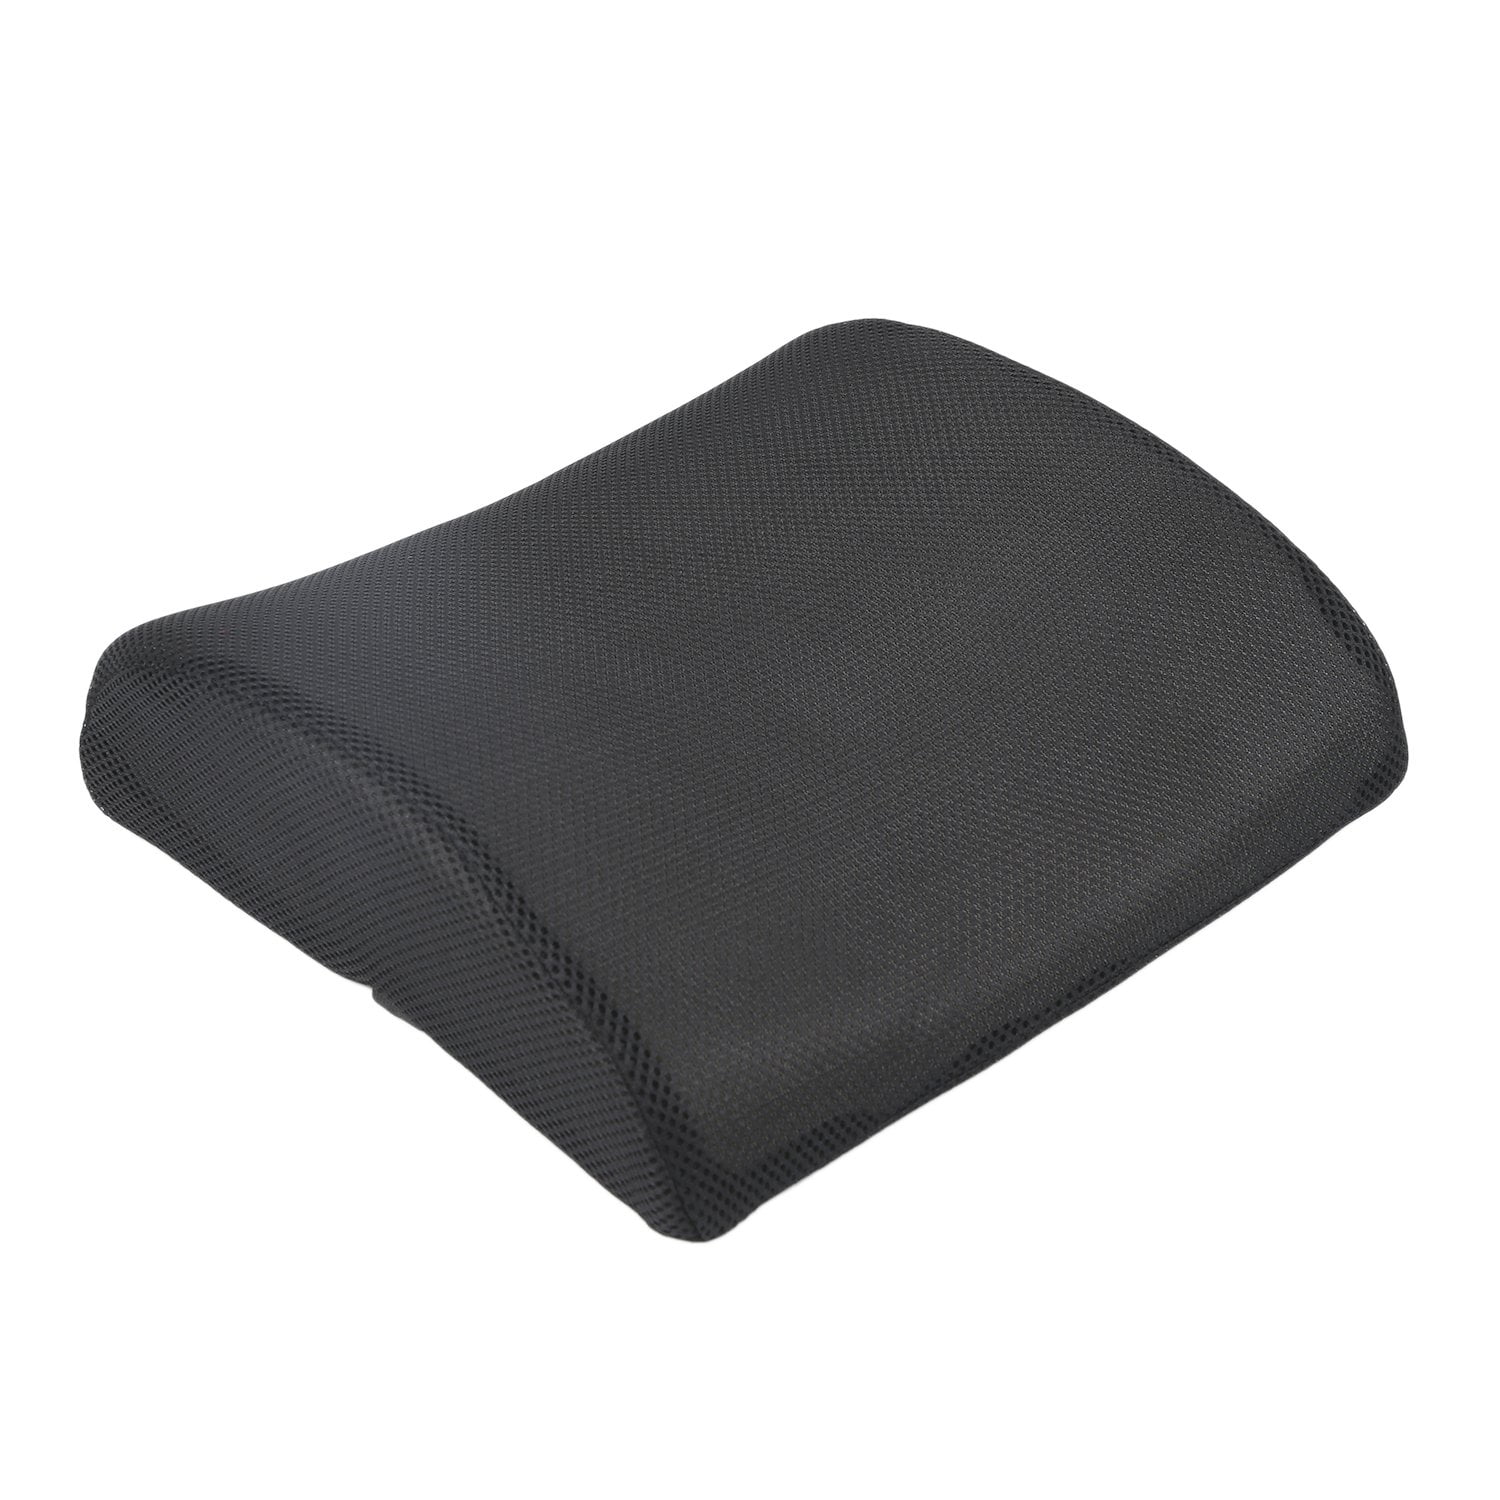 Simoniz Memory Foam Seat Cushion, Black